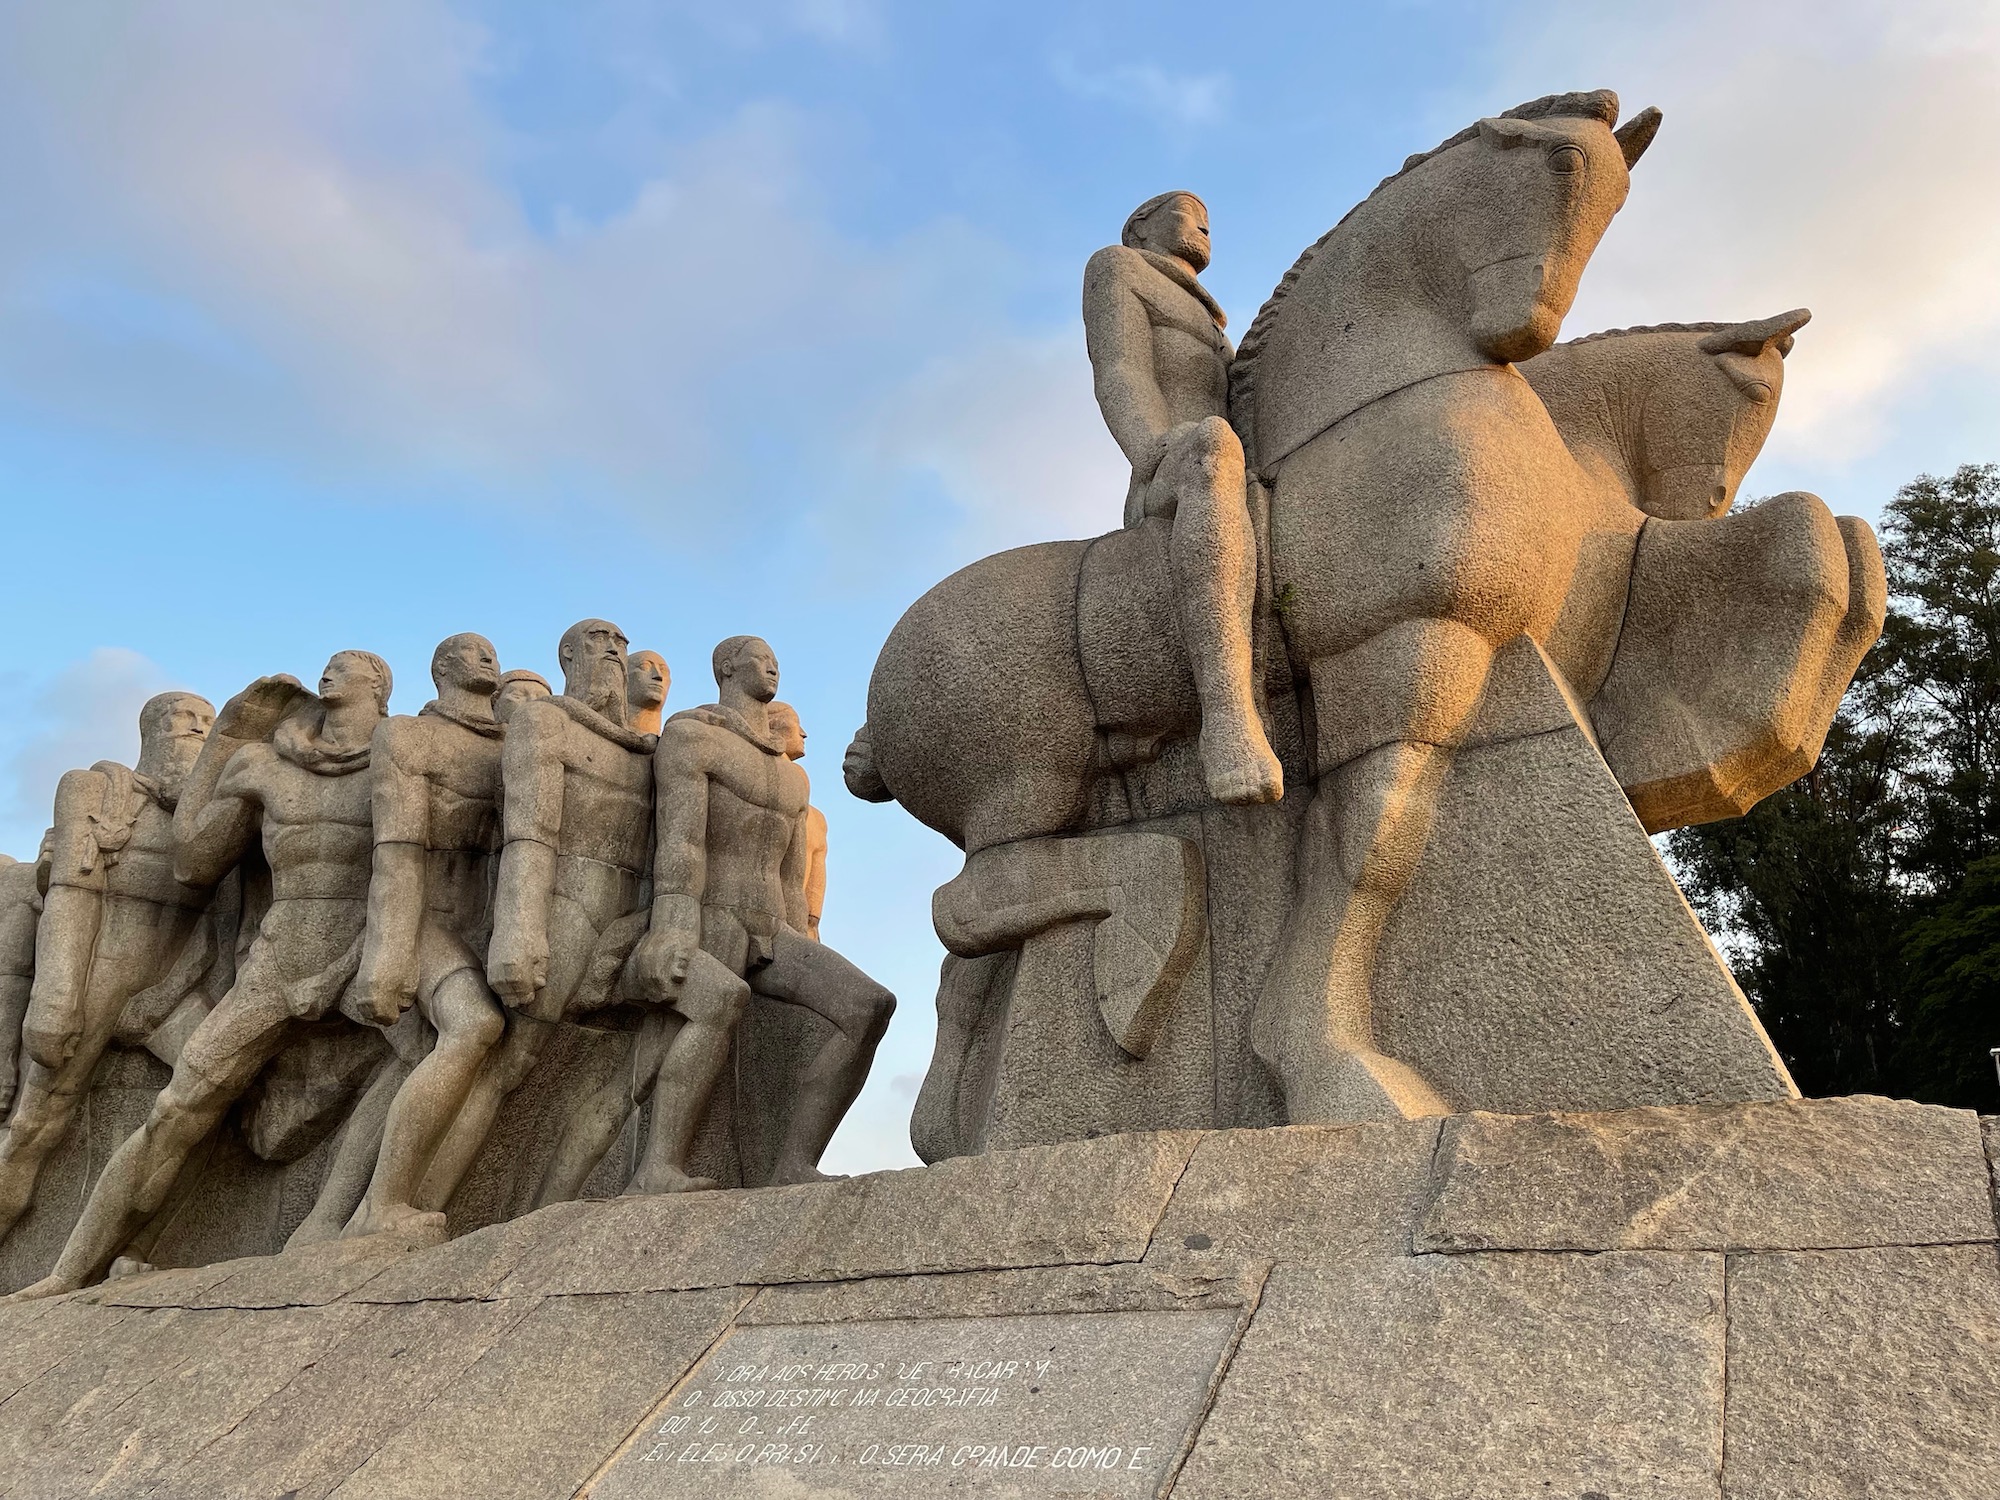 a stone statue of men riding horses